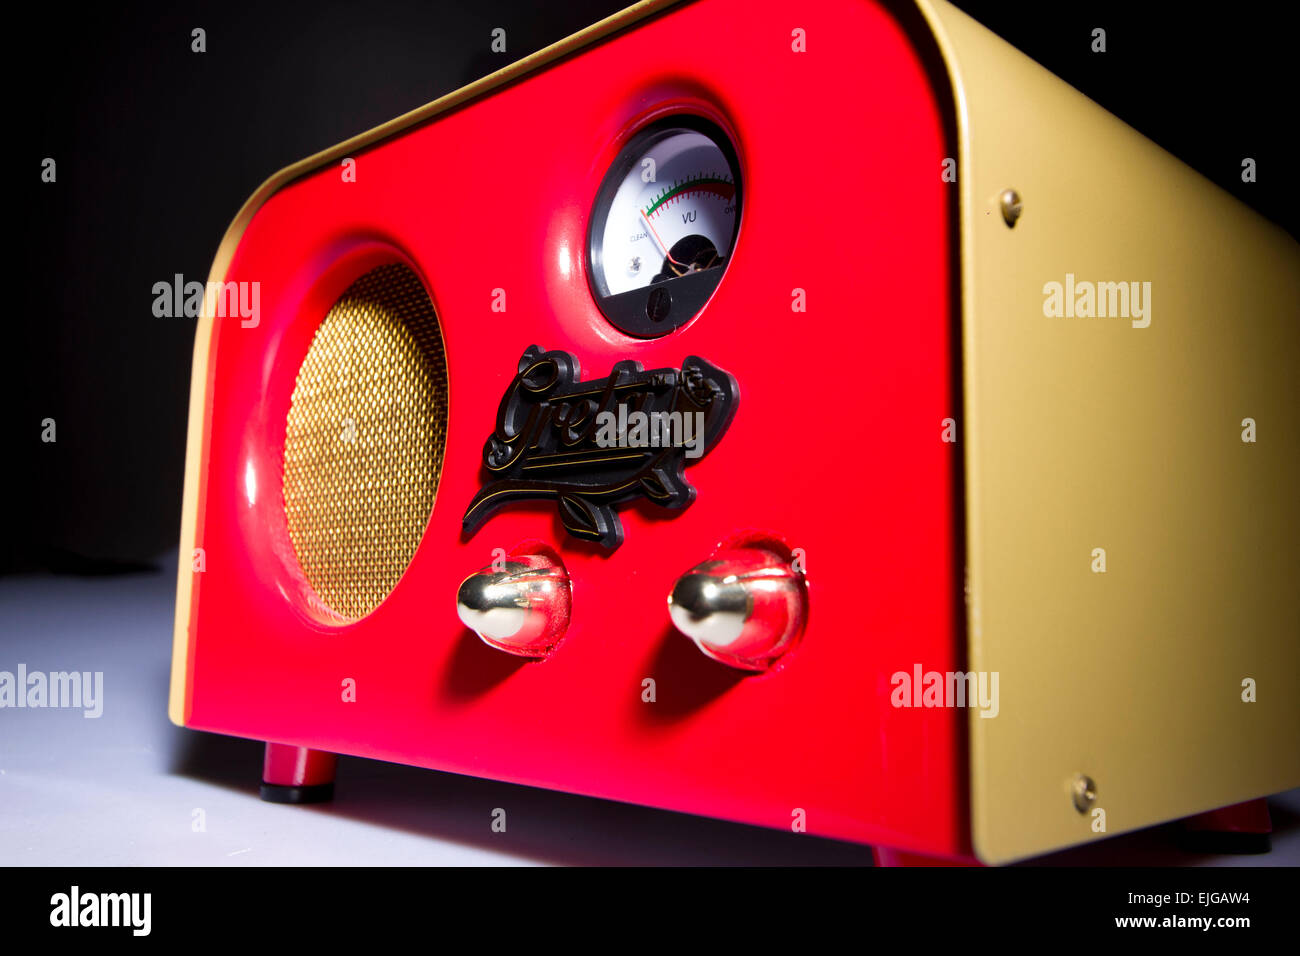 Red Guitar amplifier,amplificador de guitarra roja,vintage guitar, guitar, tails, retail, amplifier, audio, background, close up Stock Photo